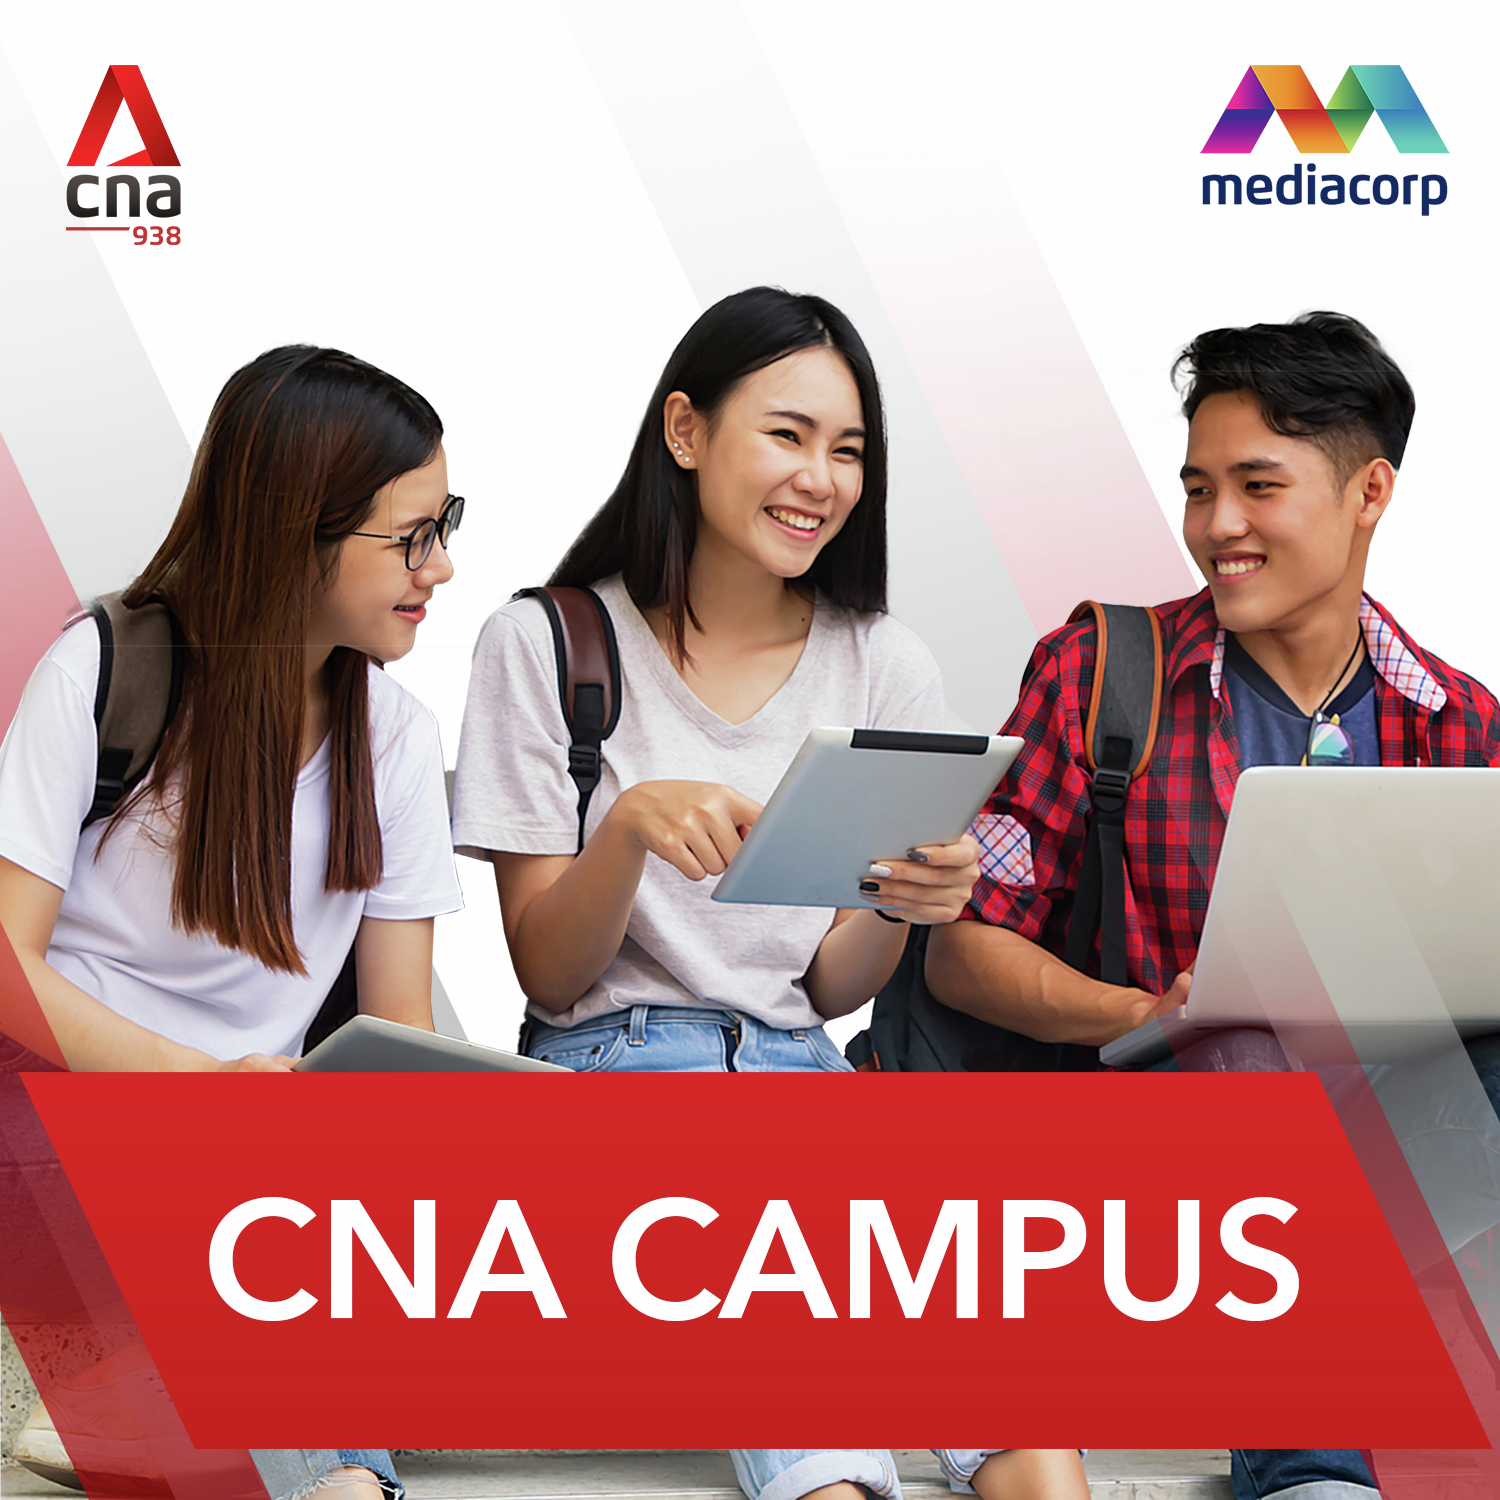 CNA Campus by CNA938